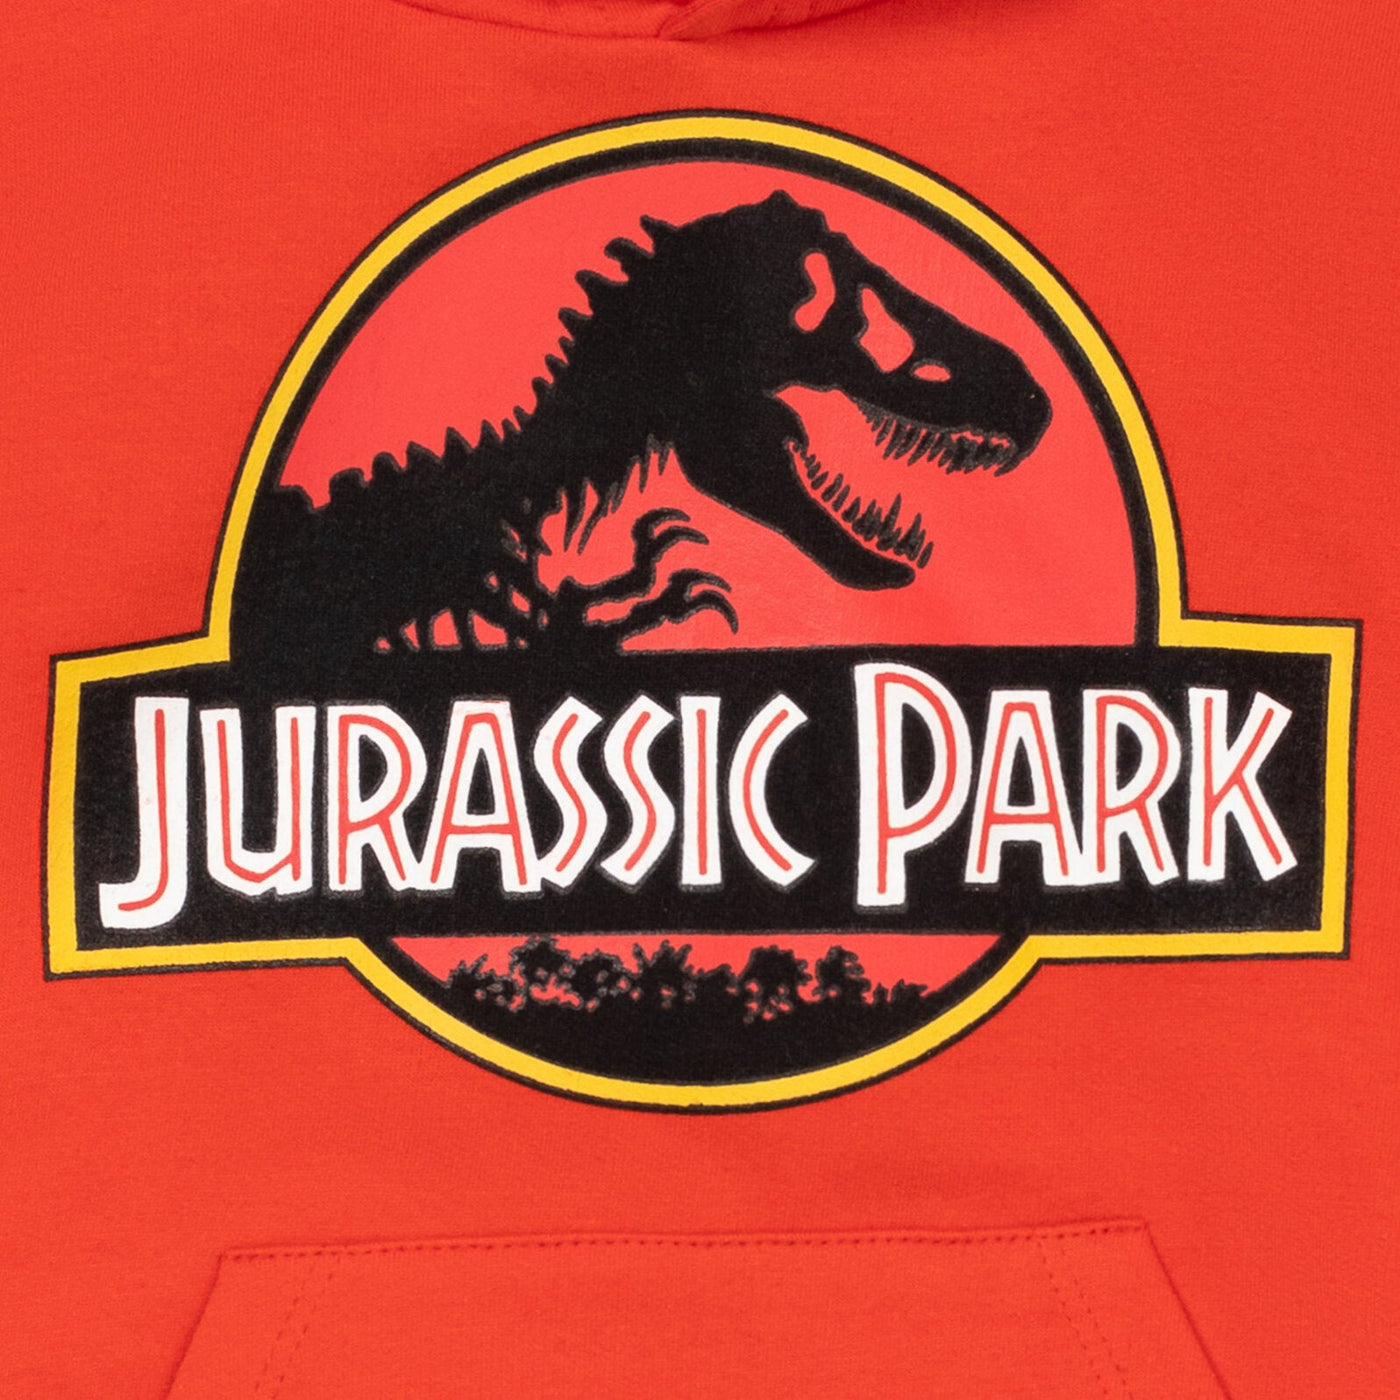 Jurassic Park Fleece Pullover Hoodie - imagikids